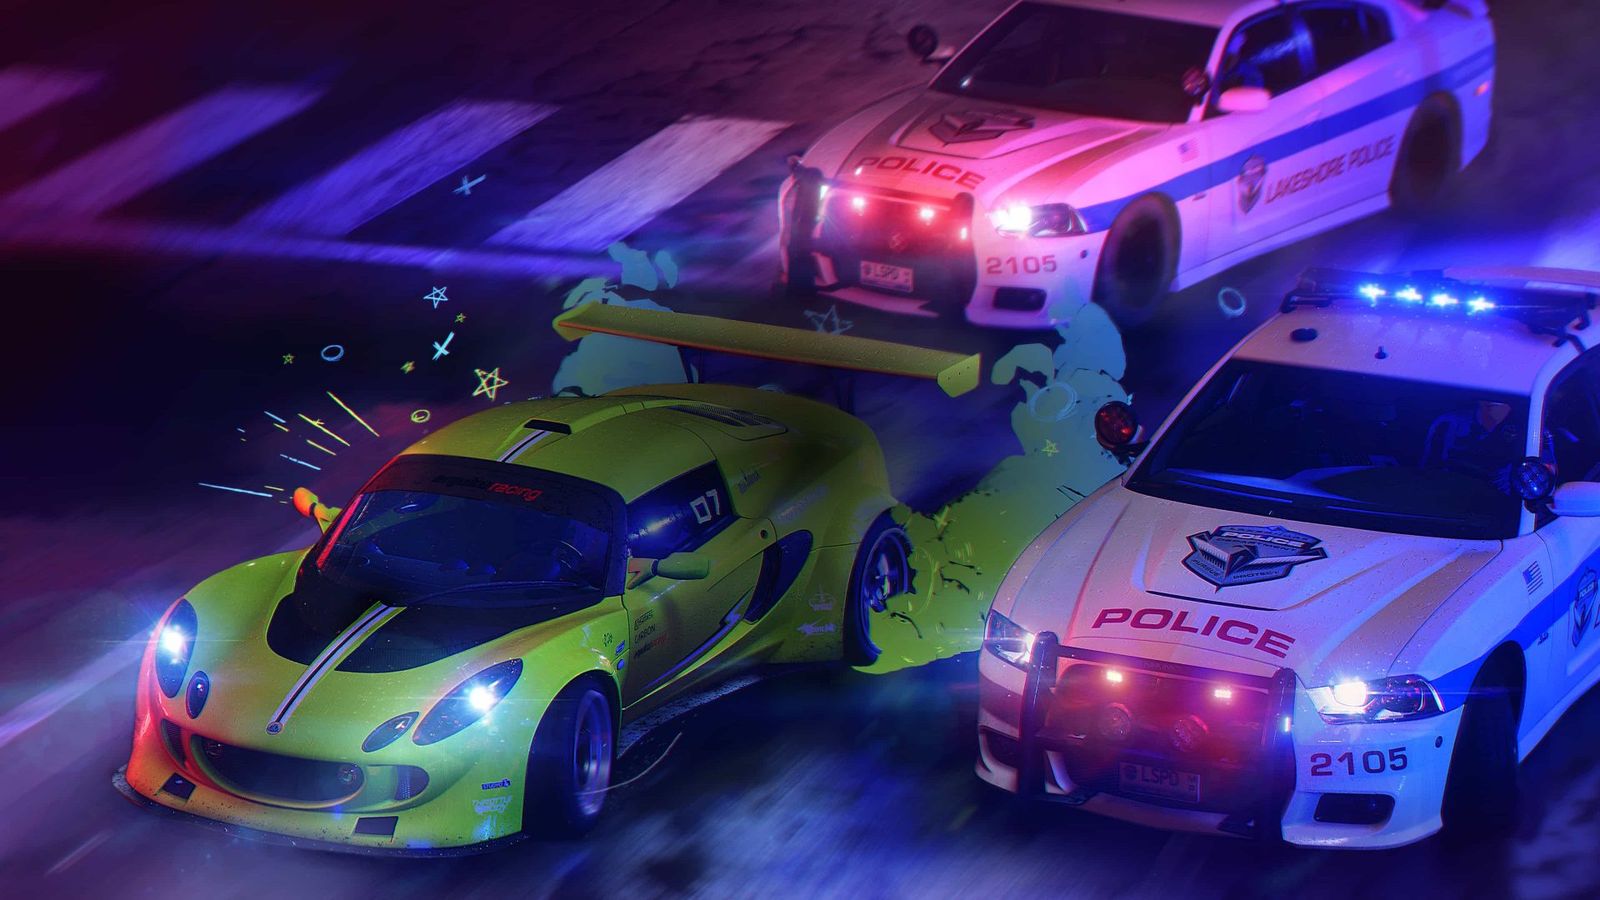 Need for Speed Unbound gameplay trailer